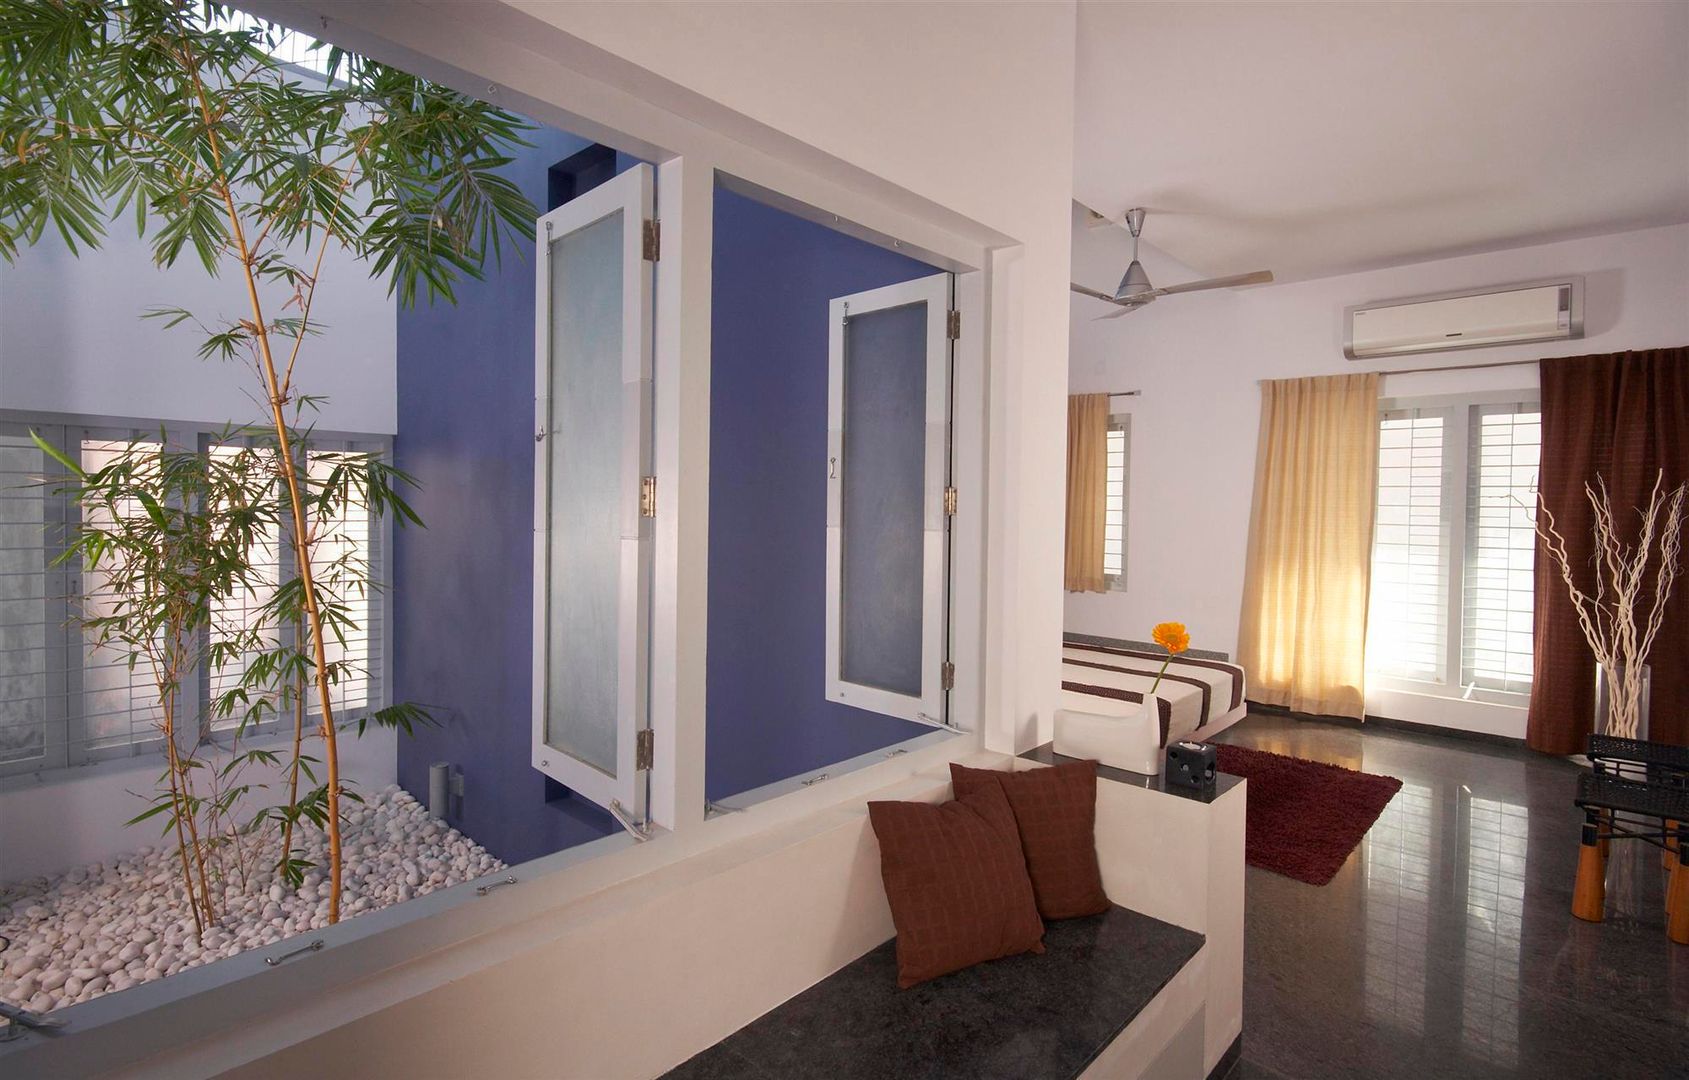 Residence at Punkunnam, Thrissur, Kerala., LIJO.RENY.architects LIJO.RENY.architects Rumah: Ide desain interior, inspirasi & gambar